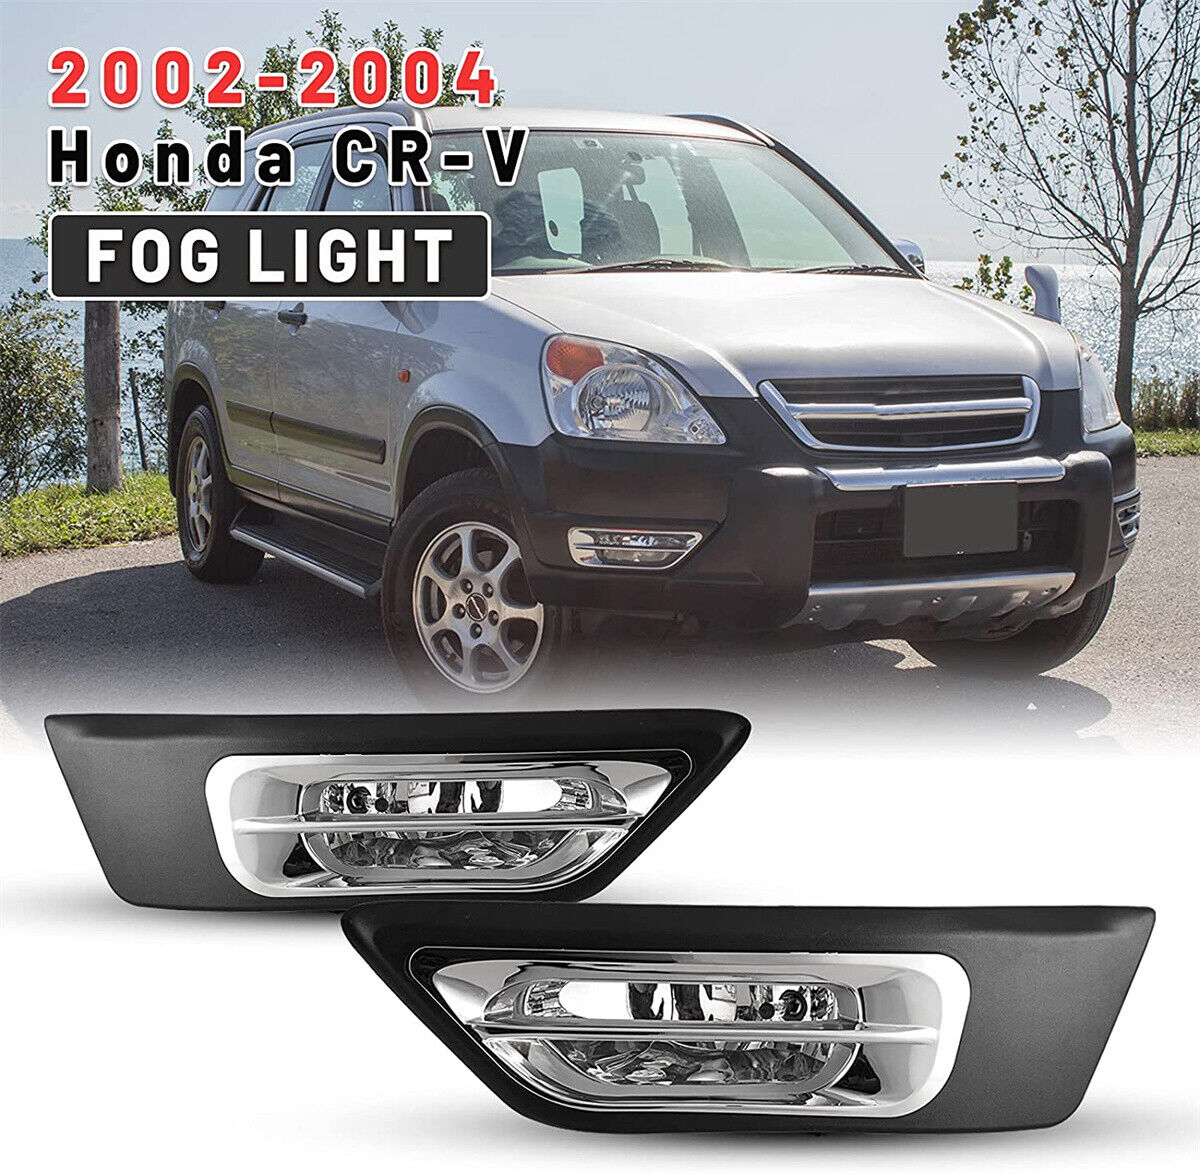 Fog Lights For 2002-2004 Honda CRV Clear Glass Lens Front Bumper Lamps w/Wiring